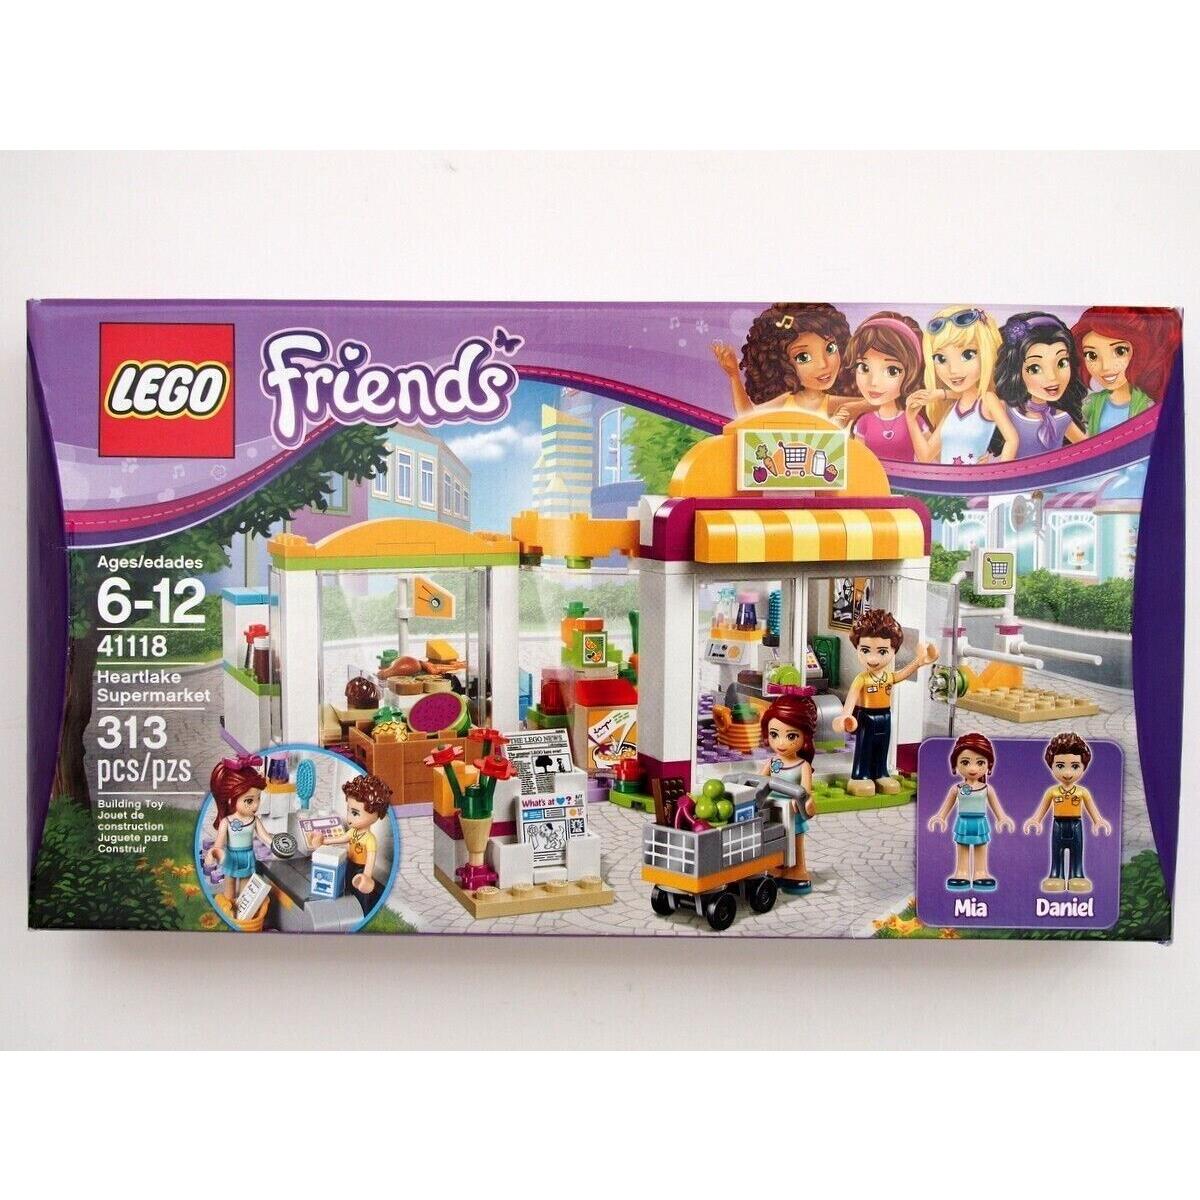 Lego Friends: Heartlake Supermarket 41118 Building Kit 313pcs Retired Set